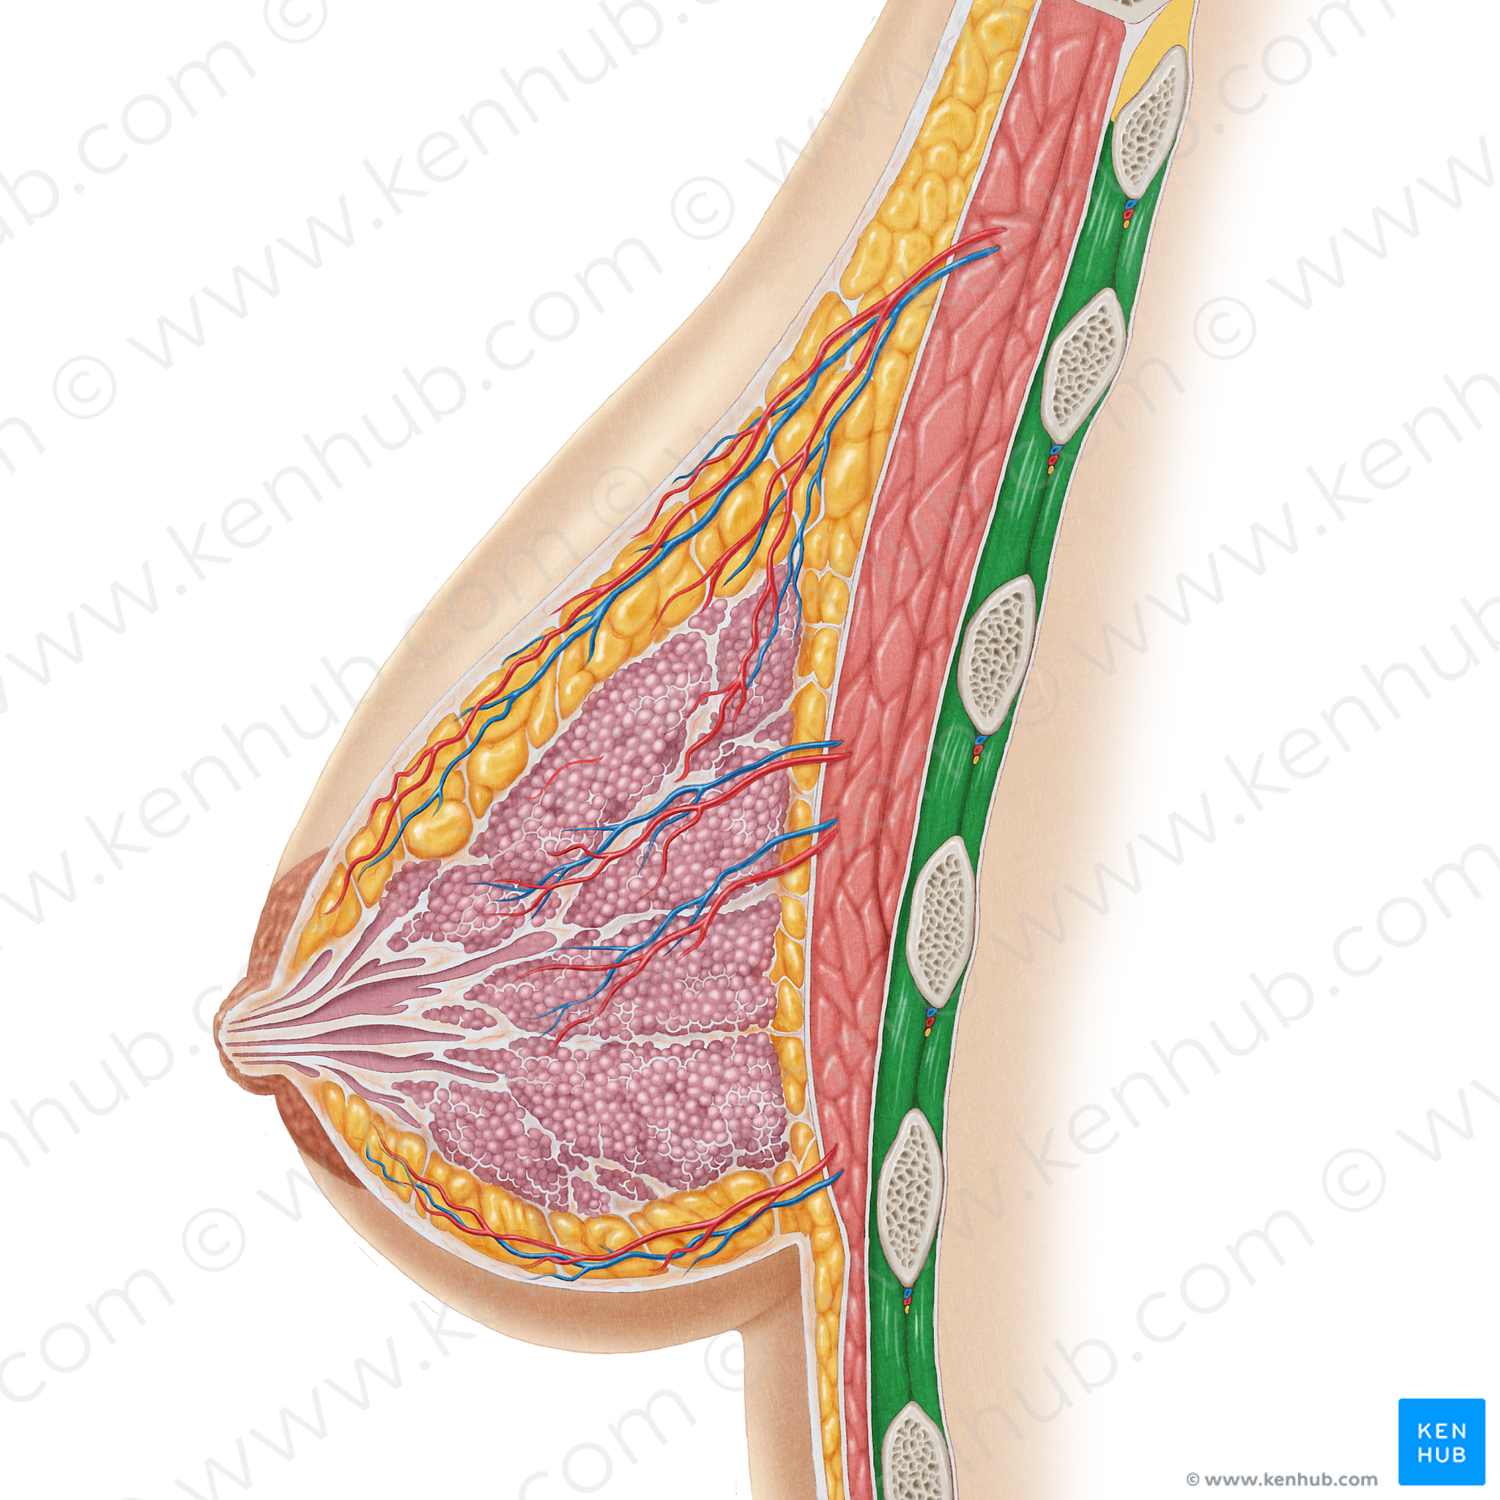 Intercostal muscles (#5118)